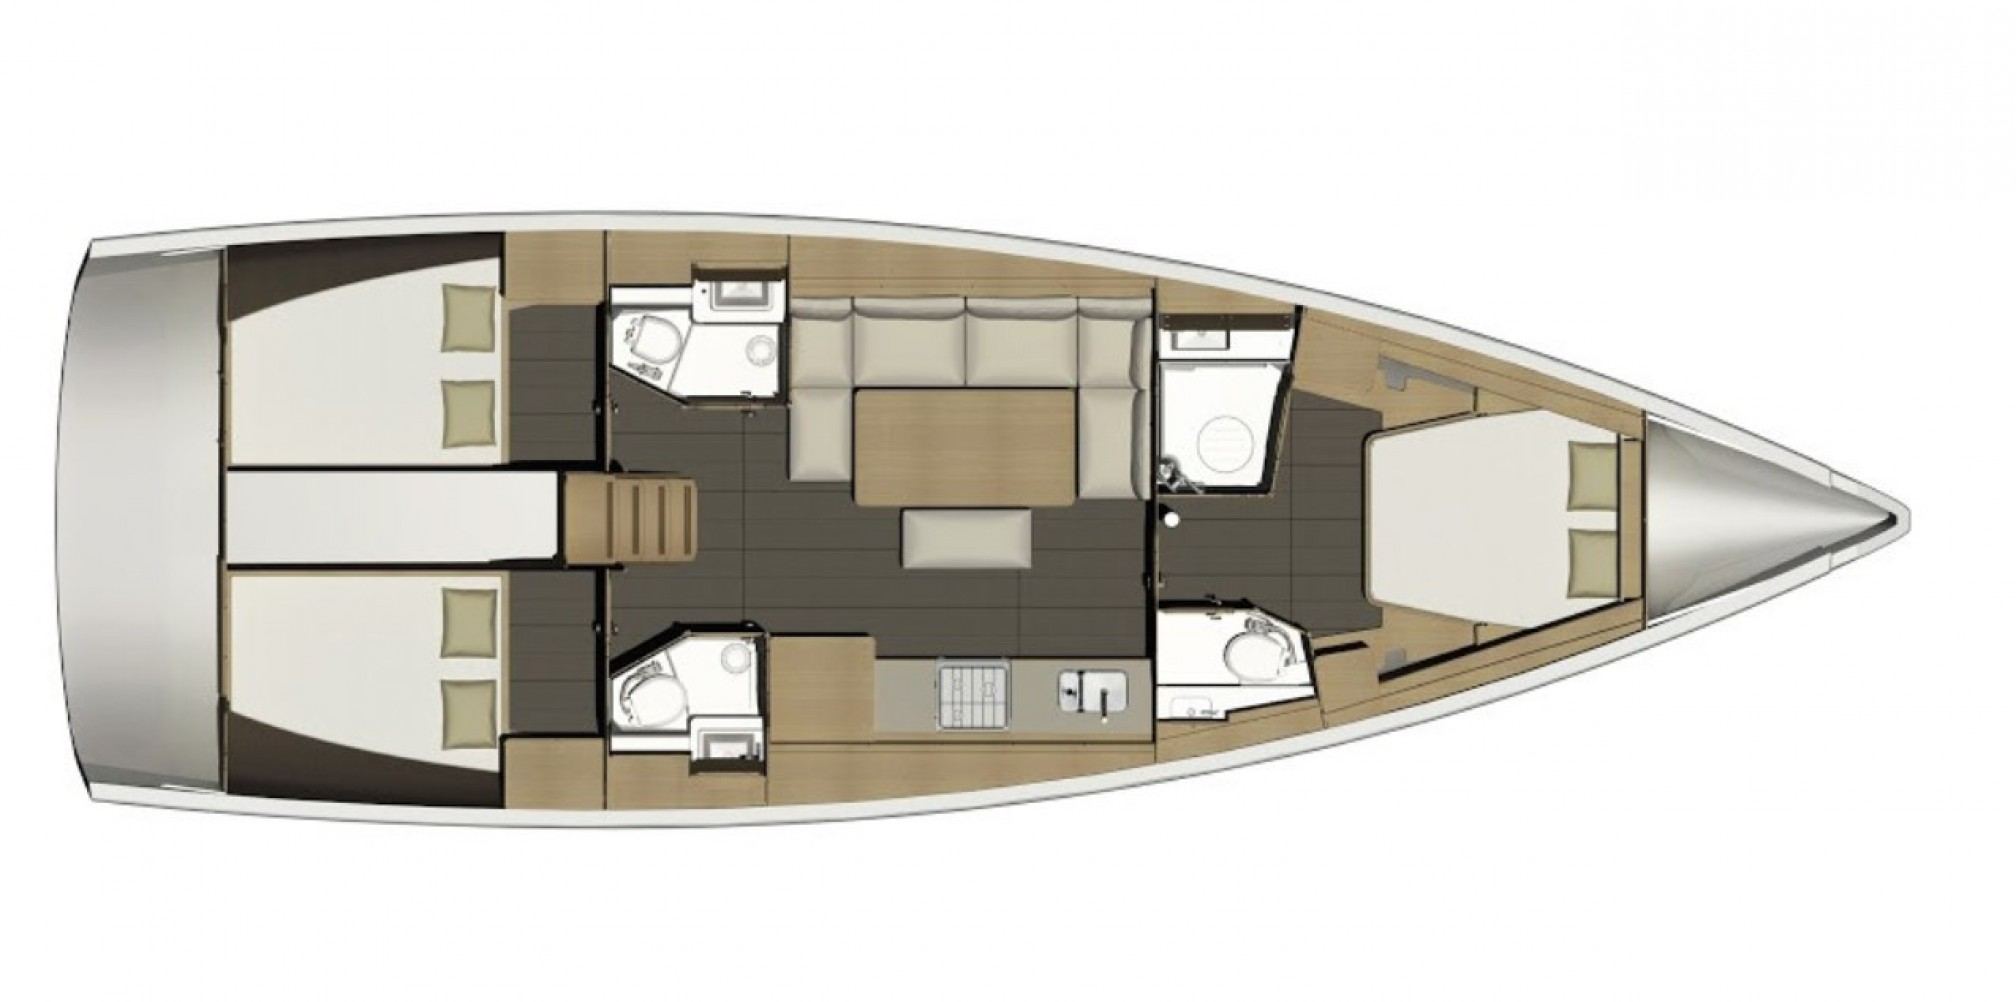 Dufour 460 GL velero de alquiler, layout